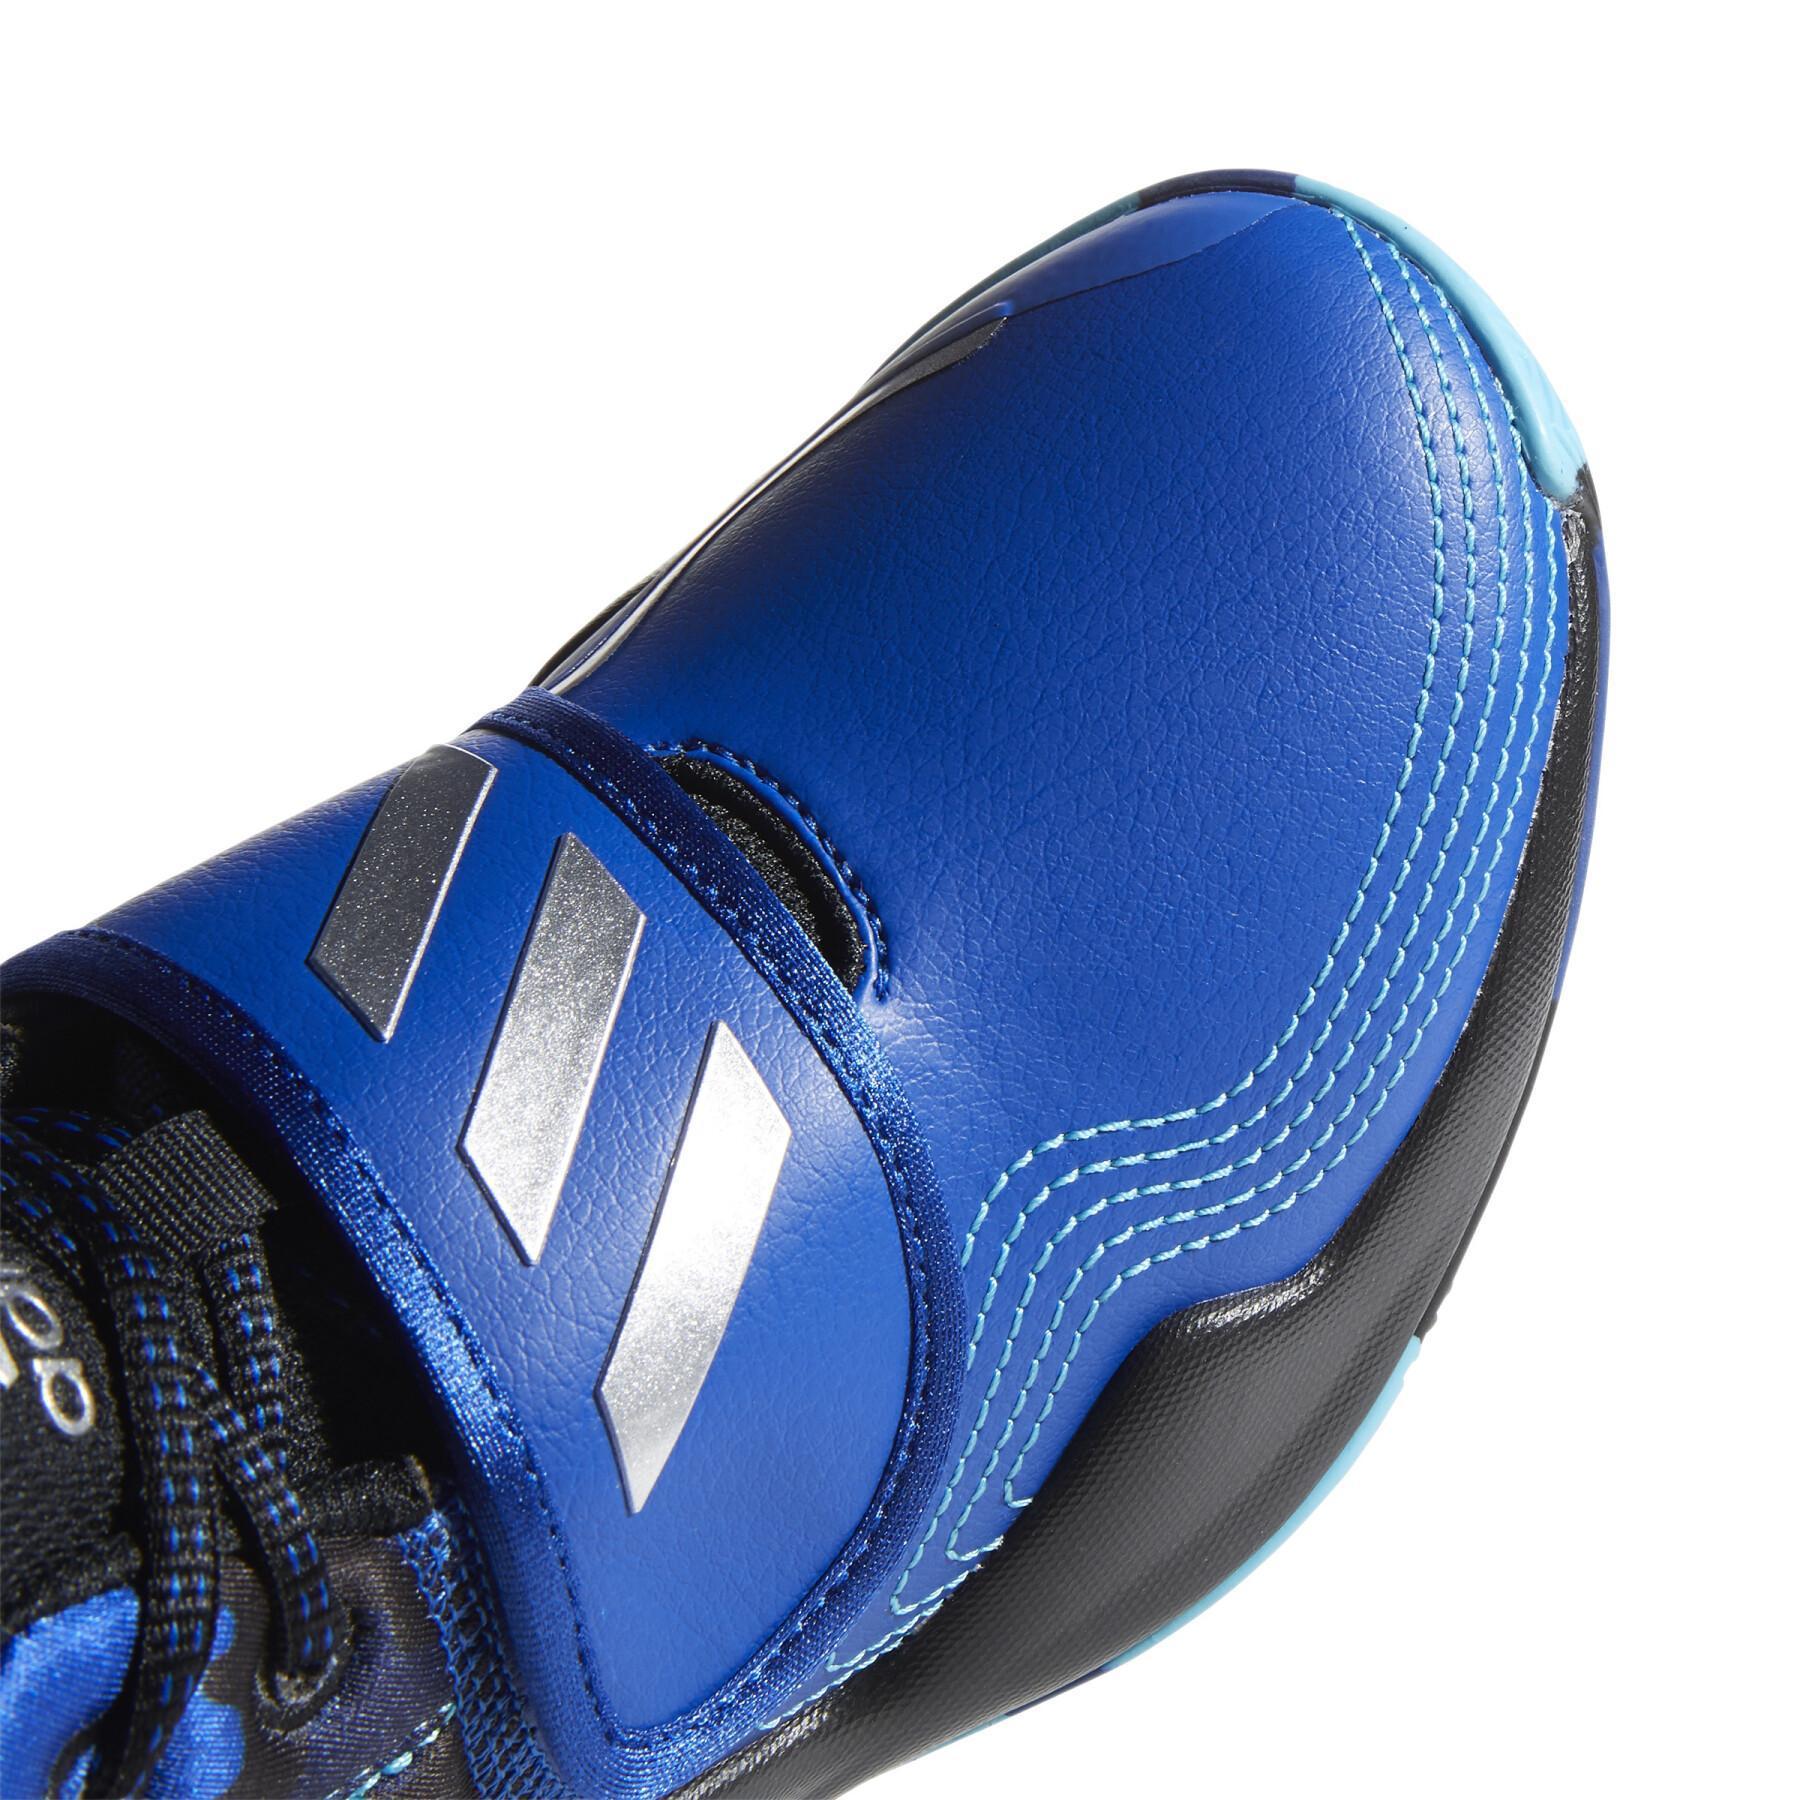 Indoor-Schuhe Kind adidas Pro Spark 2.0